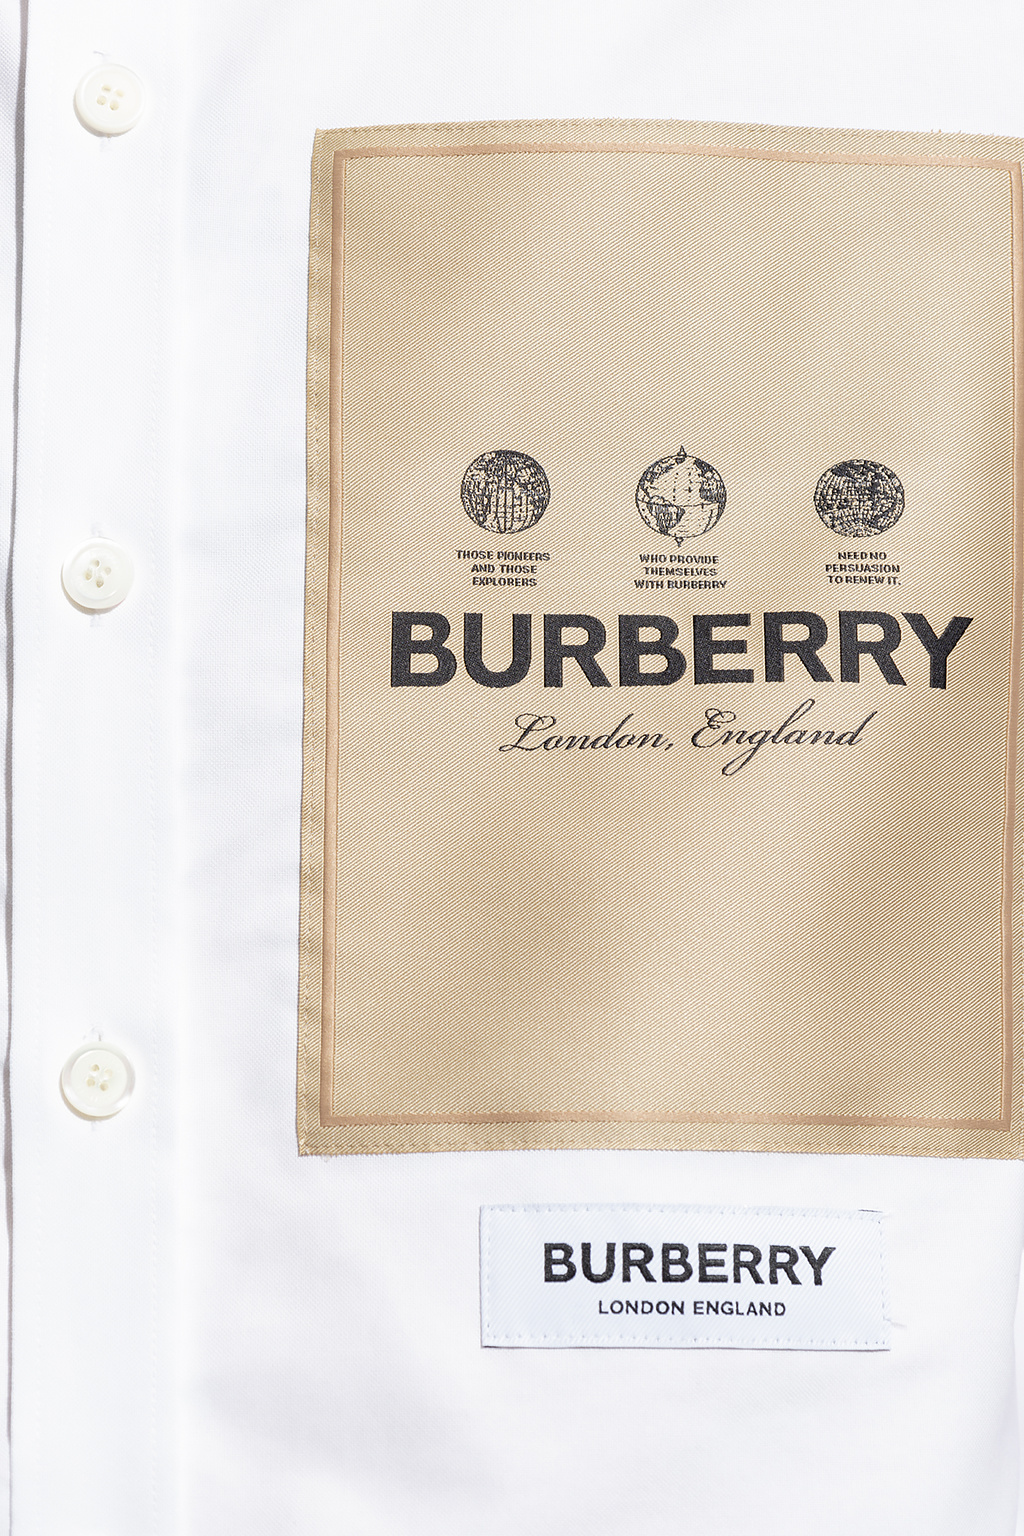 Burberry ‘Trafford’ shirt with logo